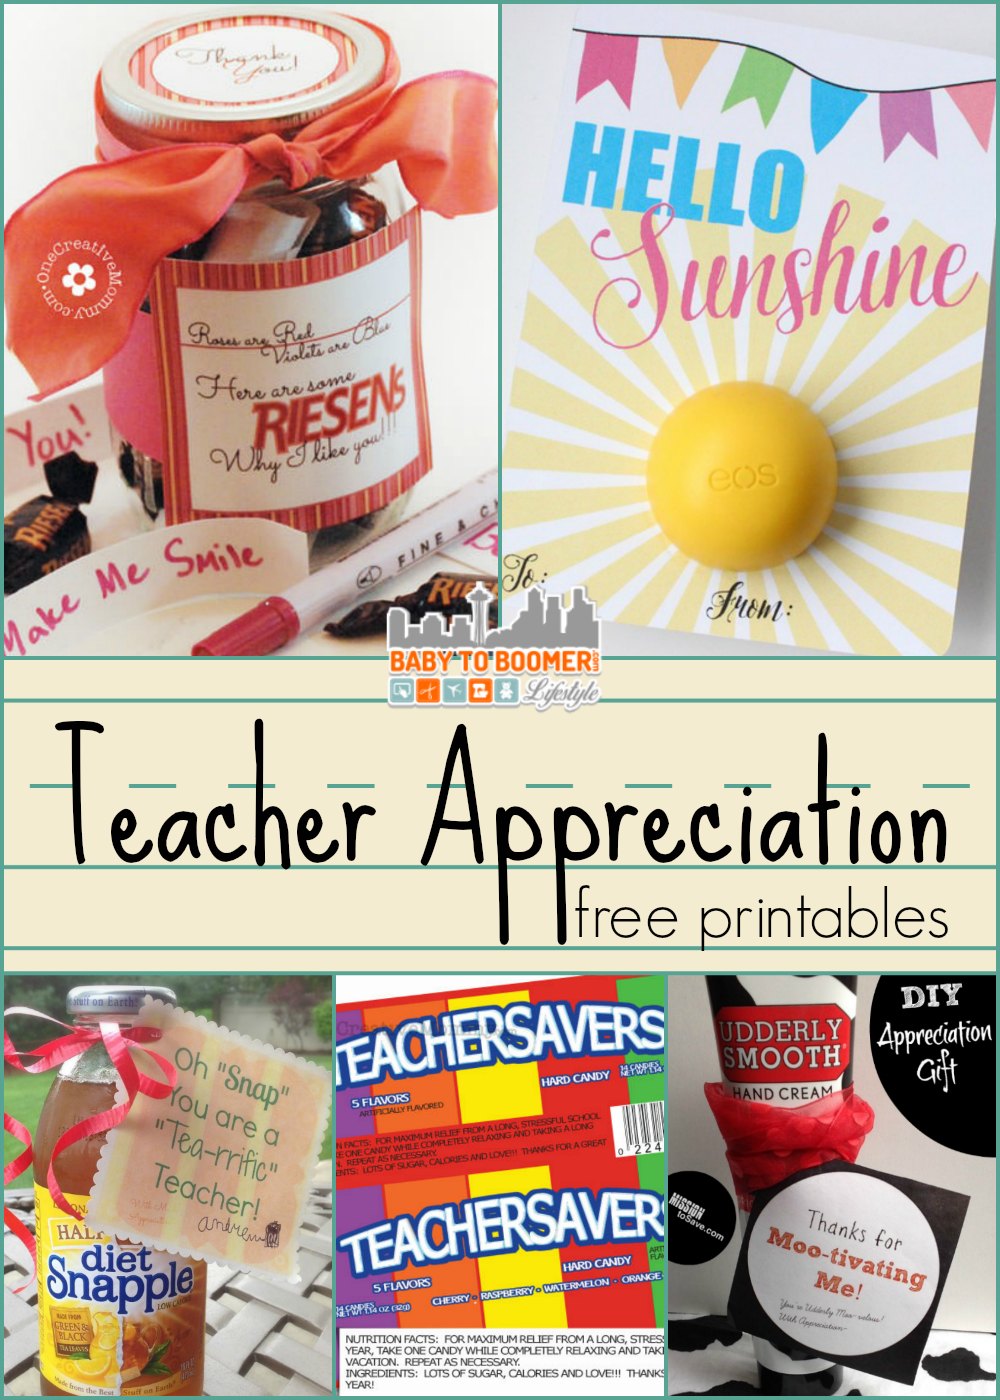 Teacher Appreciation Gift Ideas and Free Printables